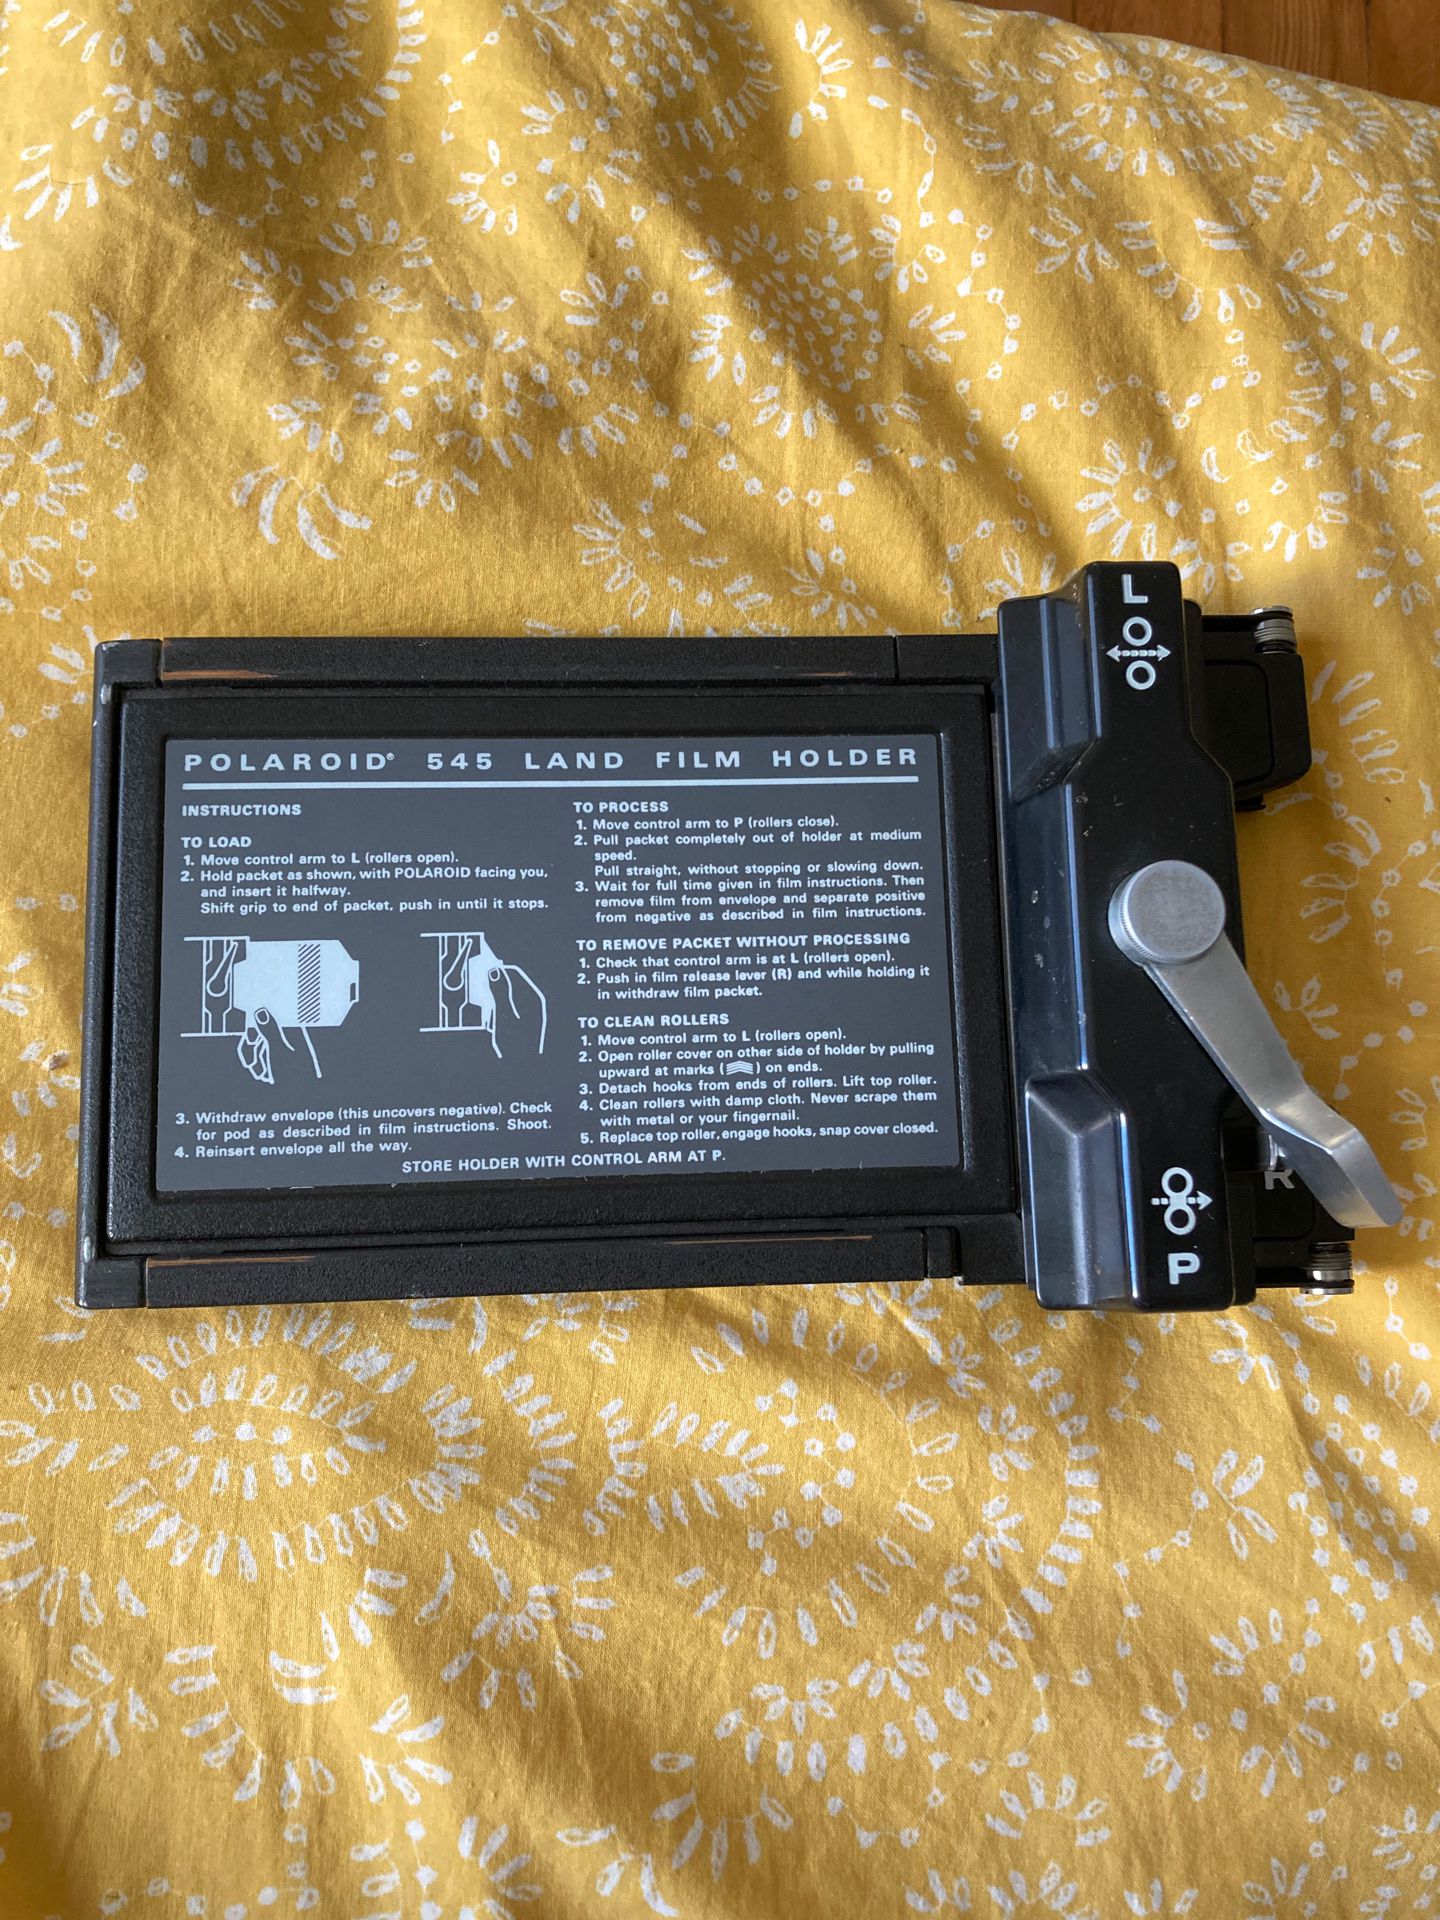 Polaroid 545 Film Holder for 4x5 large format camera